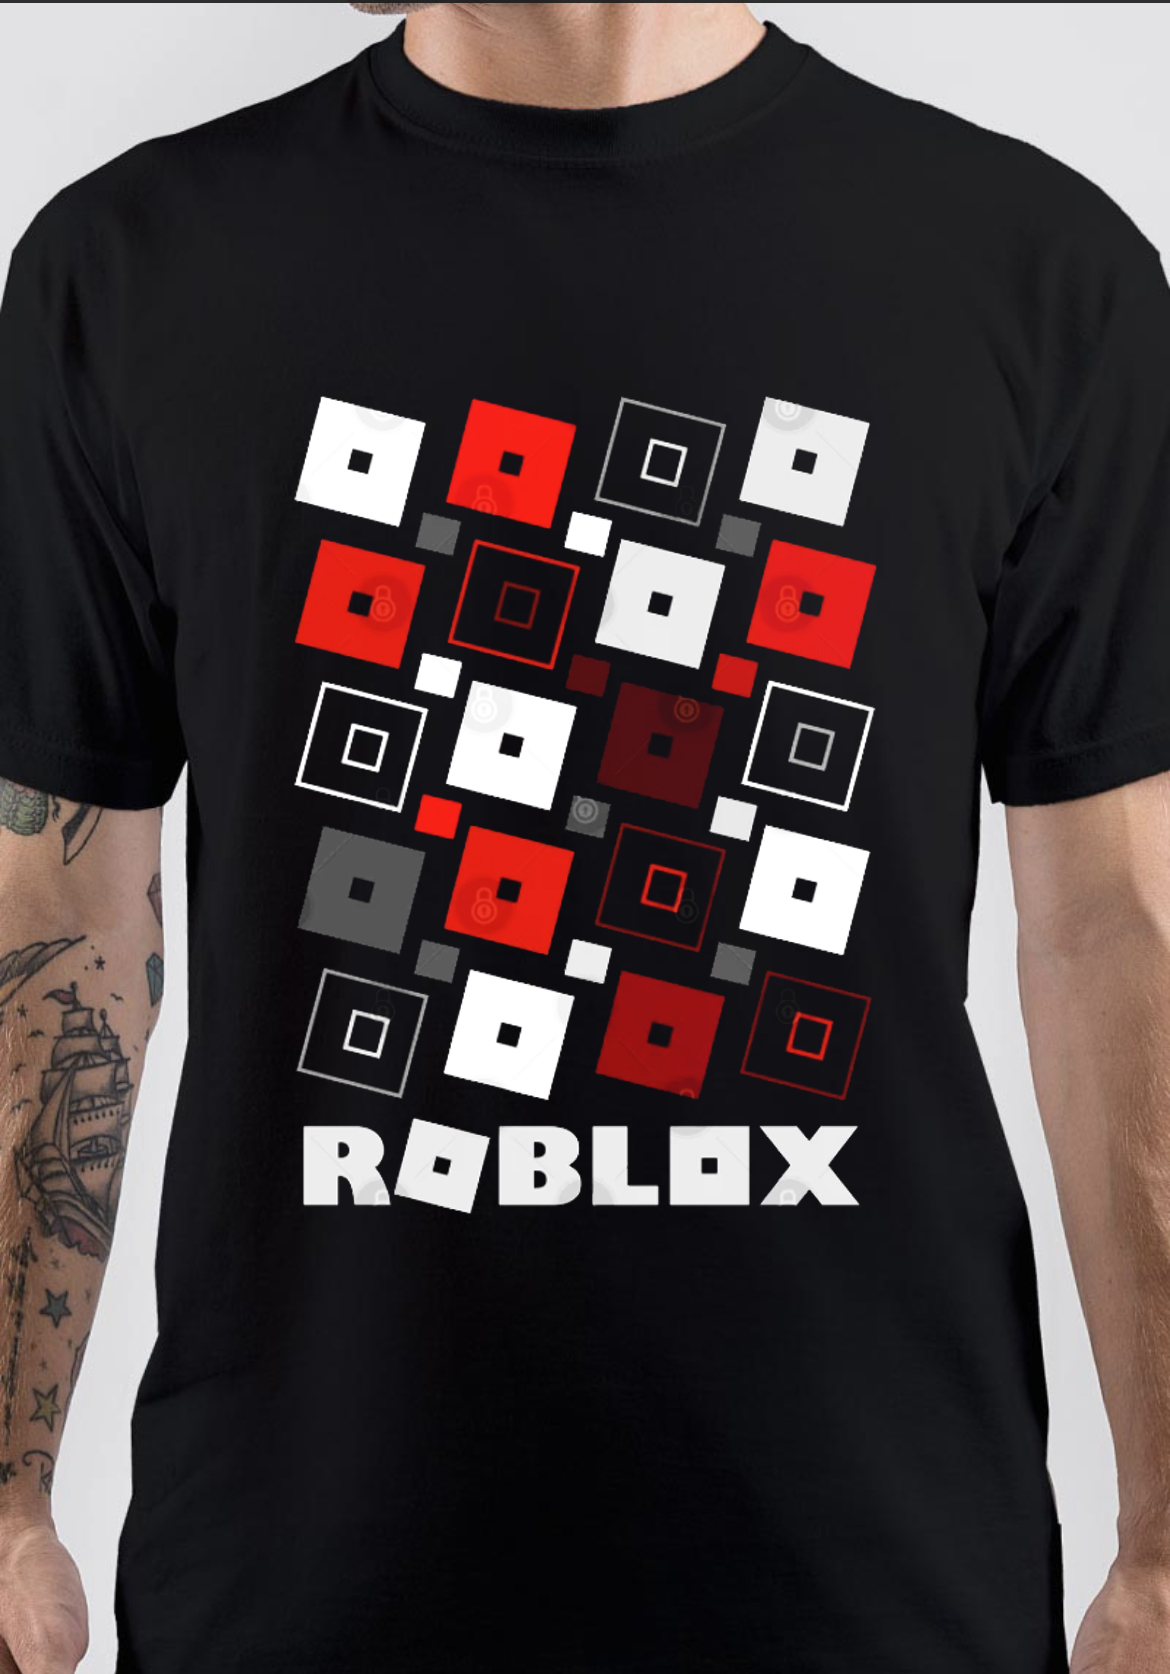 Roblox Tee I Kids Roblox T-Shirt I Girls Roblox Top I Roblox Girls T-Shirt  | eBay